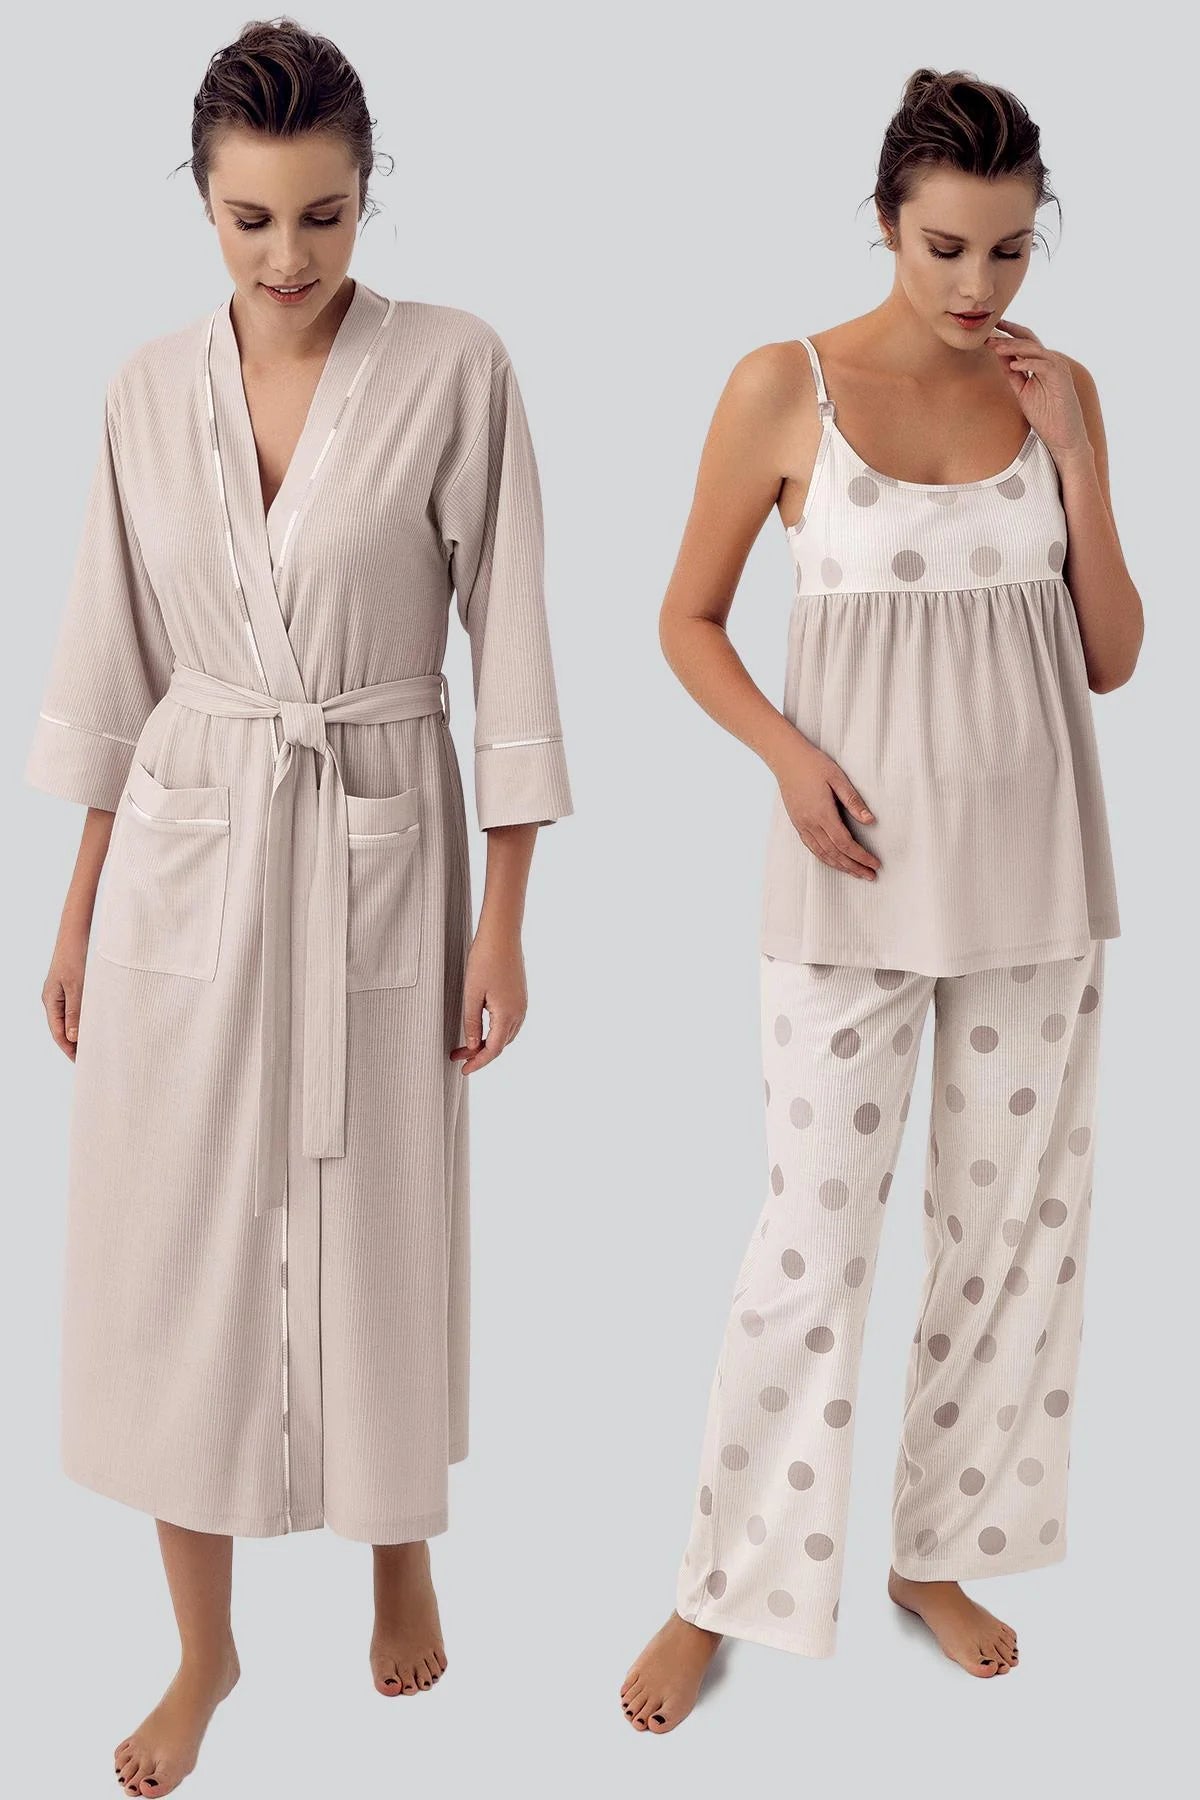 Shopymommy 16301 Polka Dot 3-Pieces Maternity & Nursing Pajamas With Robe Beige